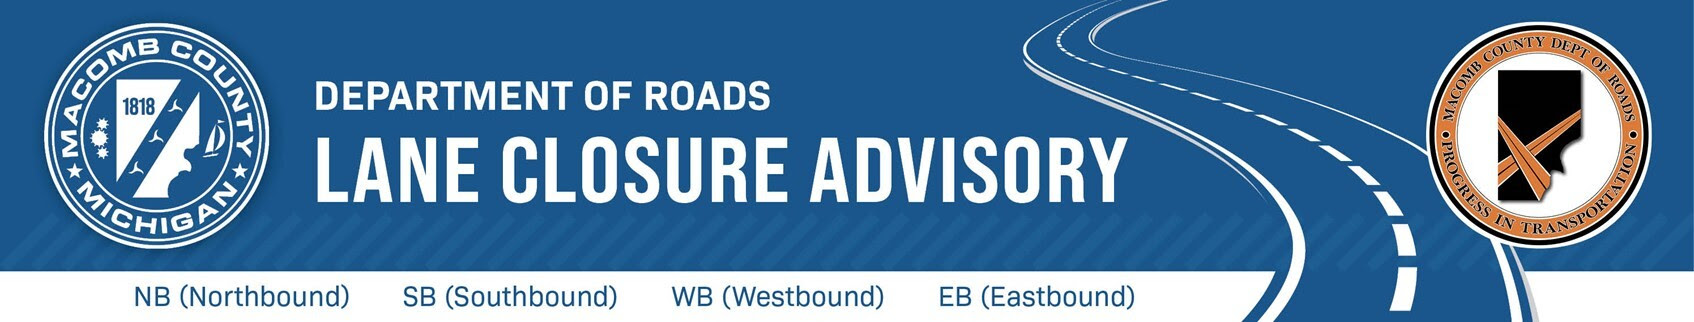 Department of Roads Lane Closure Advisory